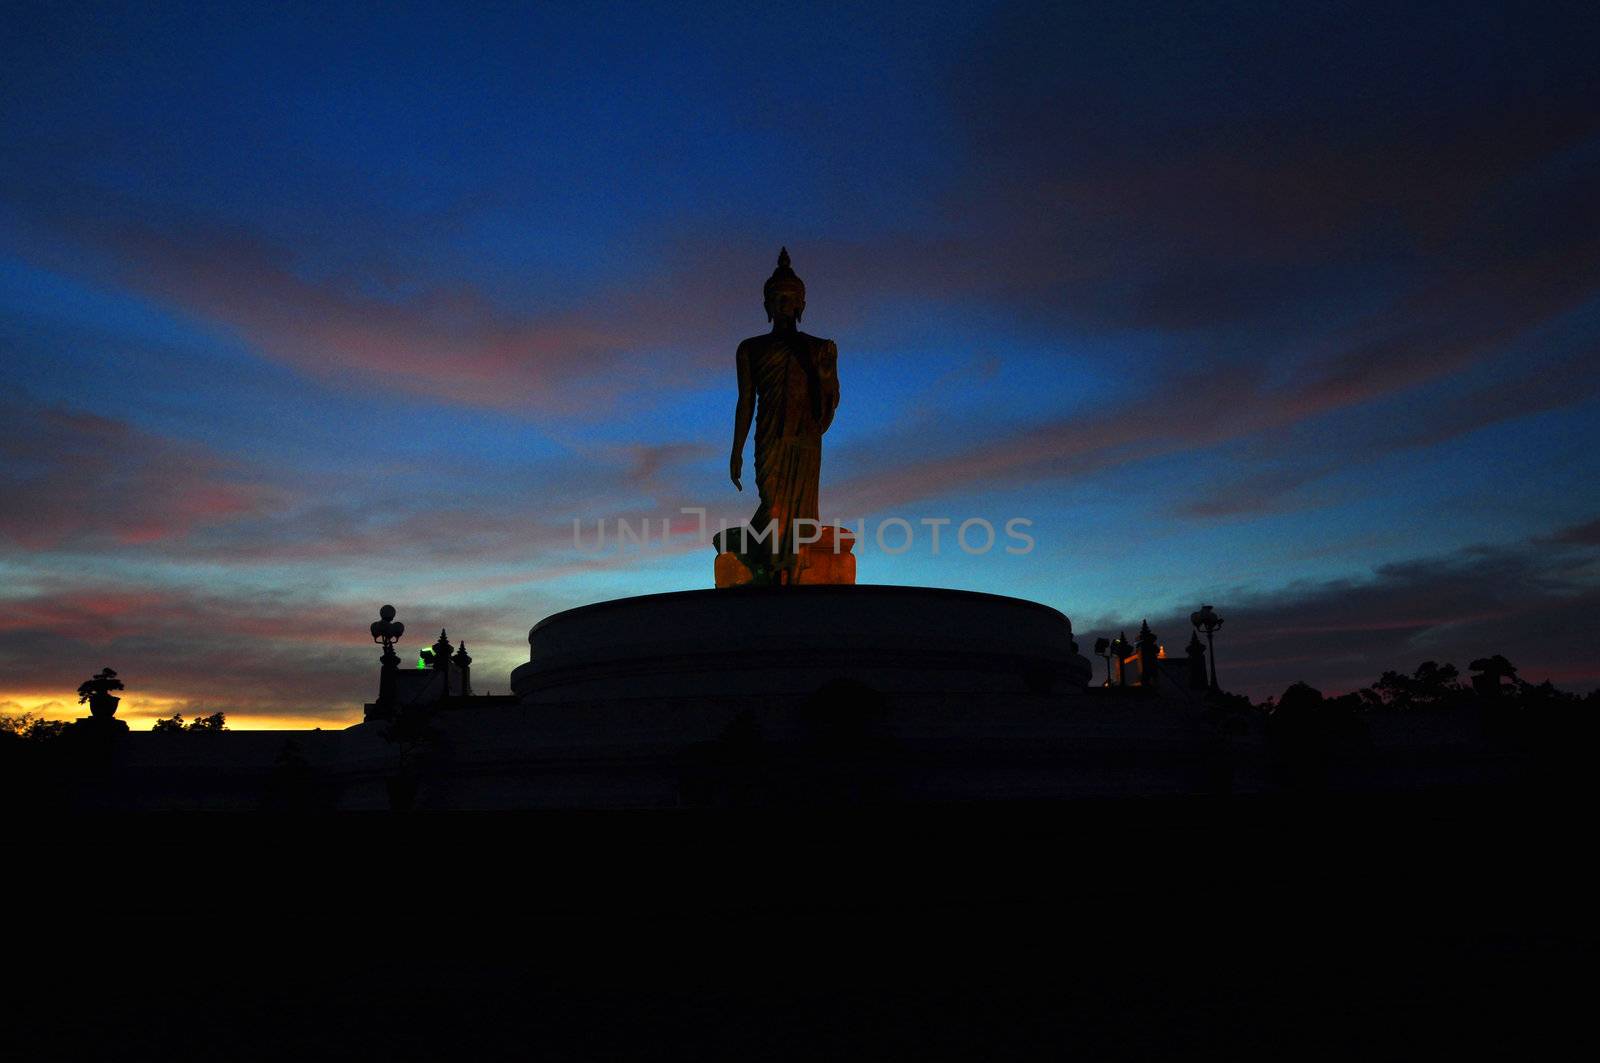 Buddha statue in night at Puttamontol temple, Thailand